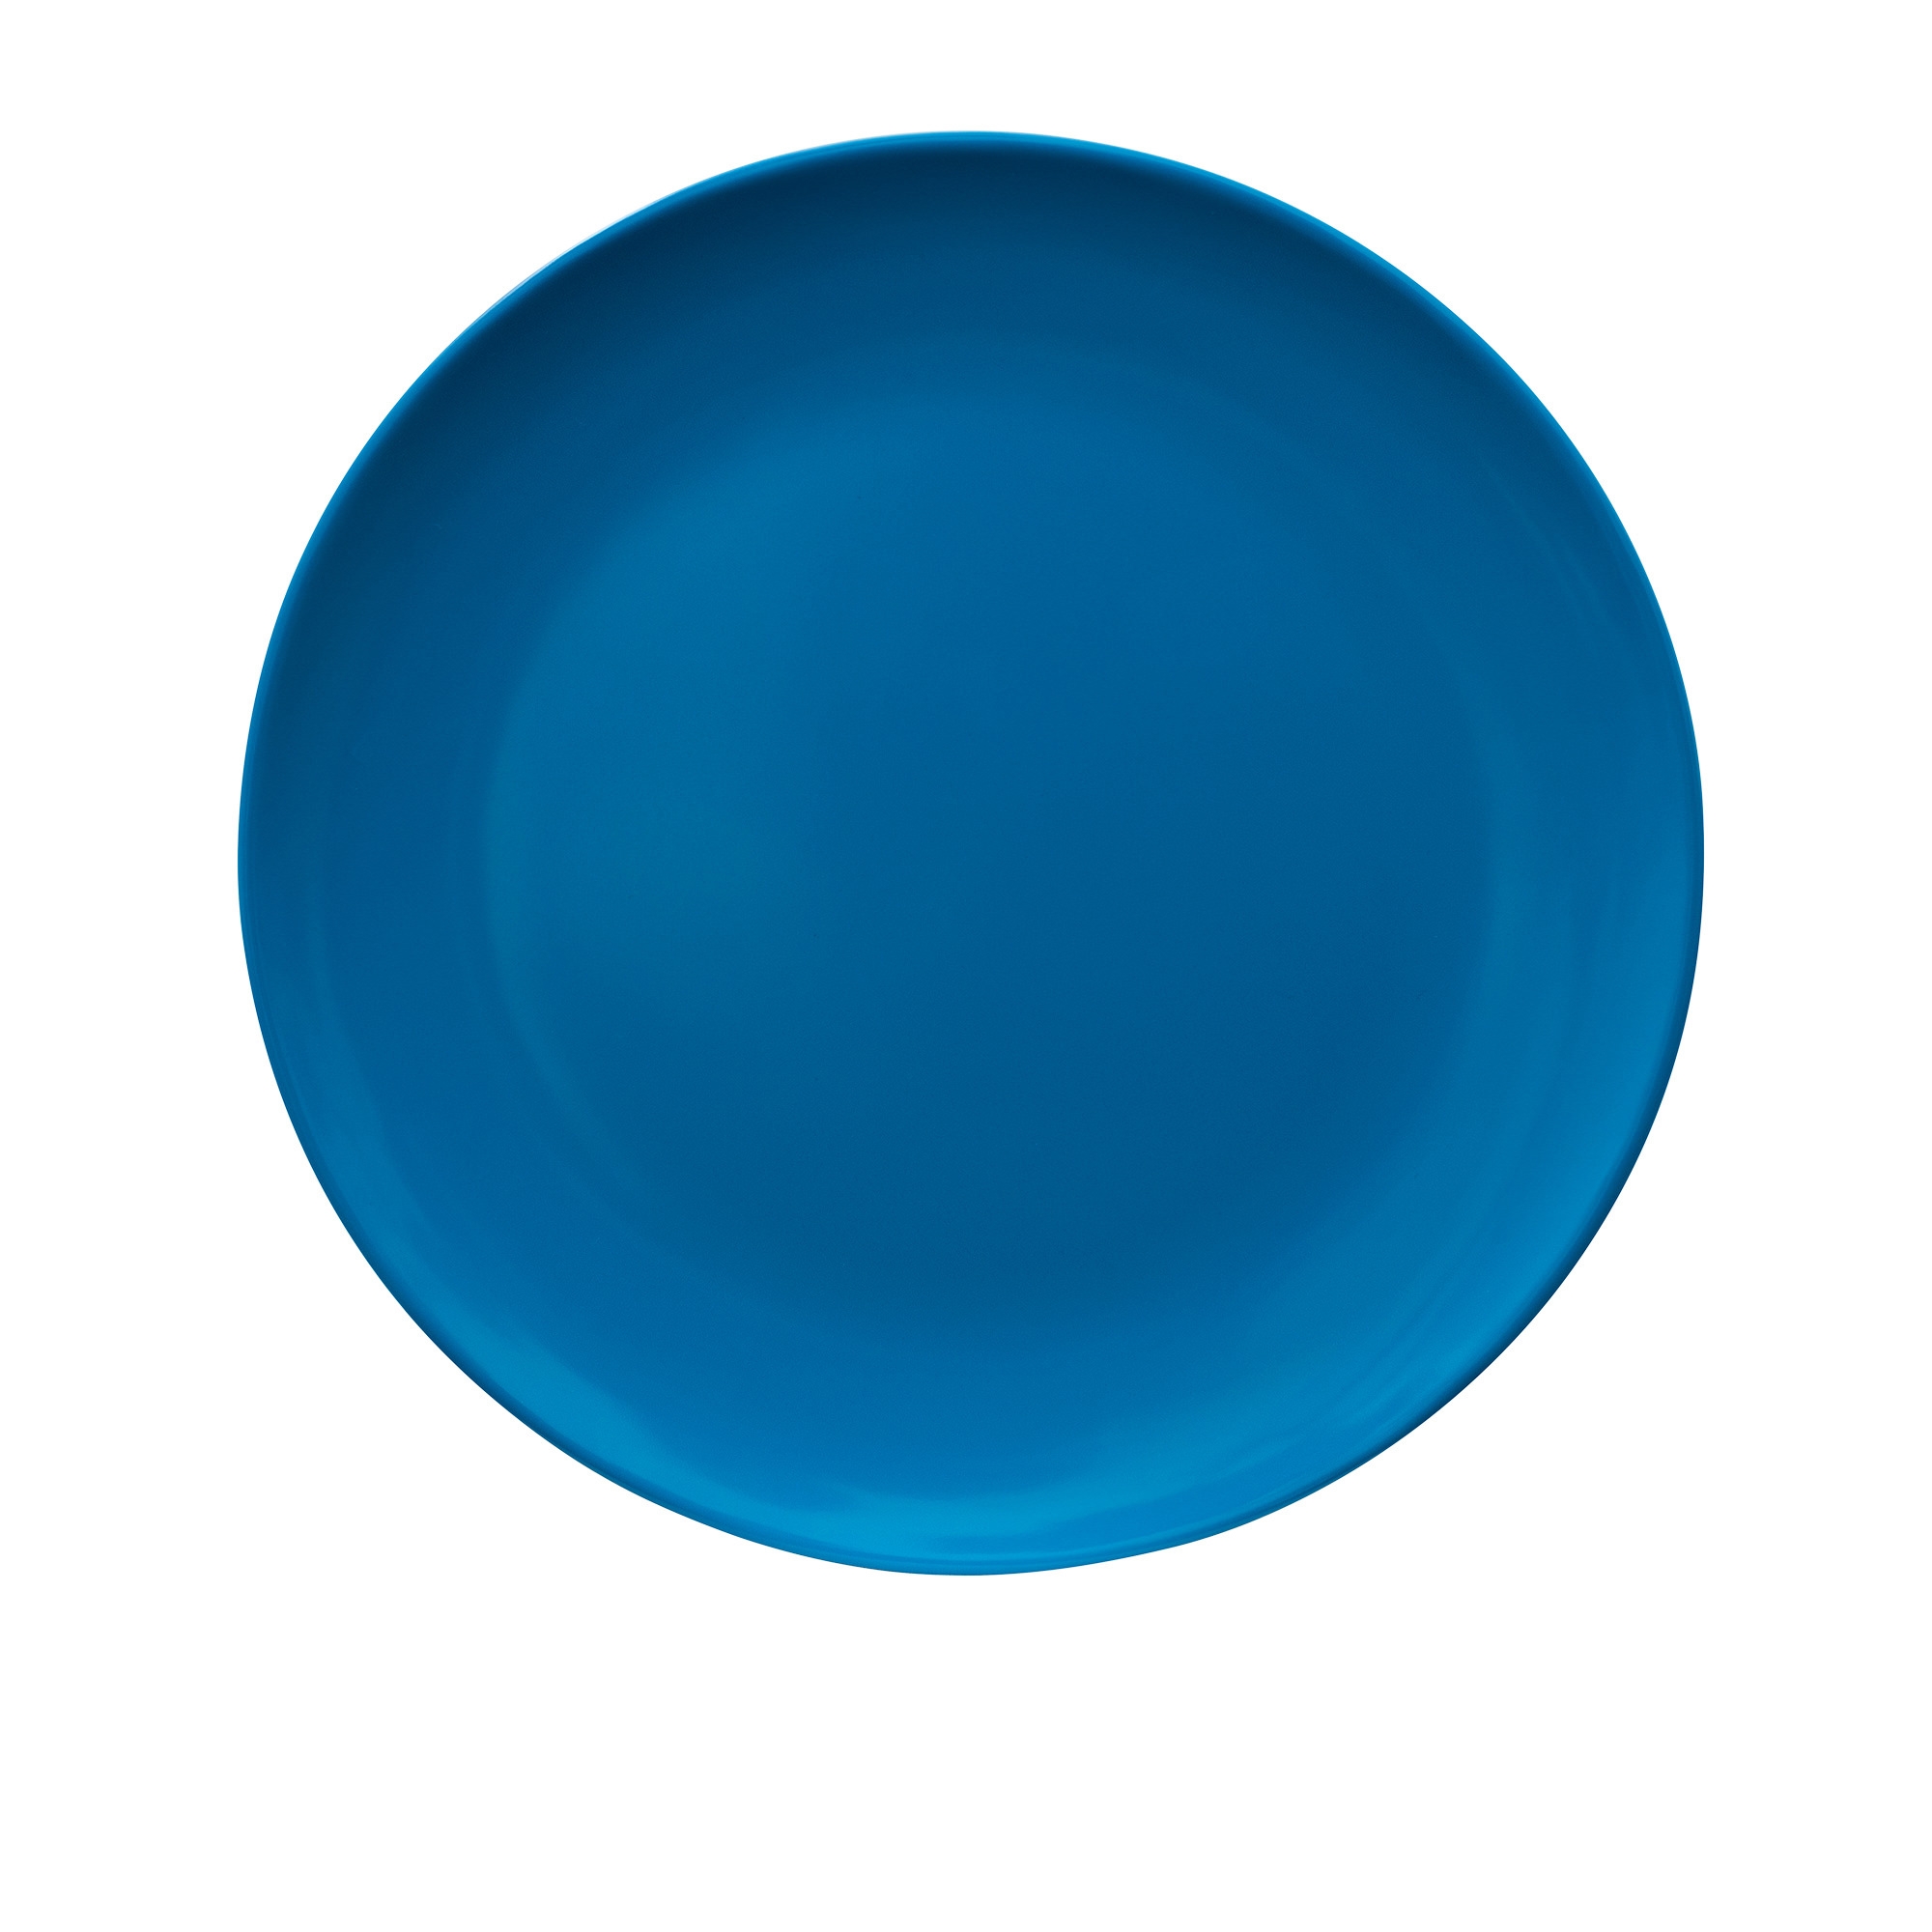 Serroni Melamine Plate 21cm Reflex Blue Image 1